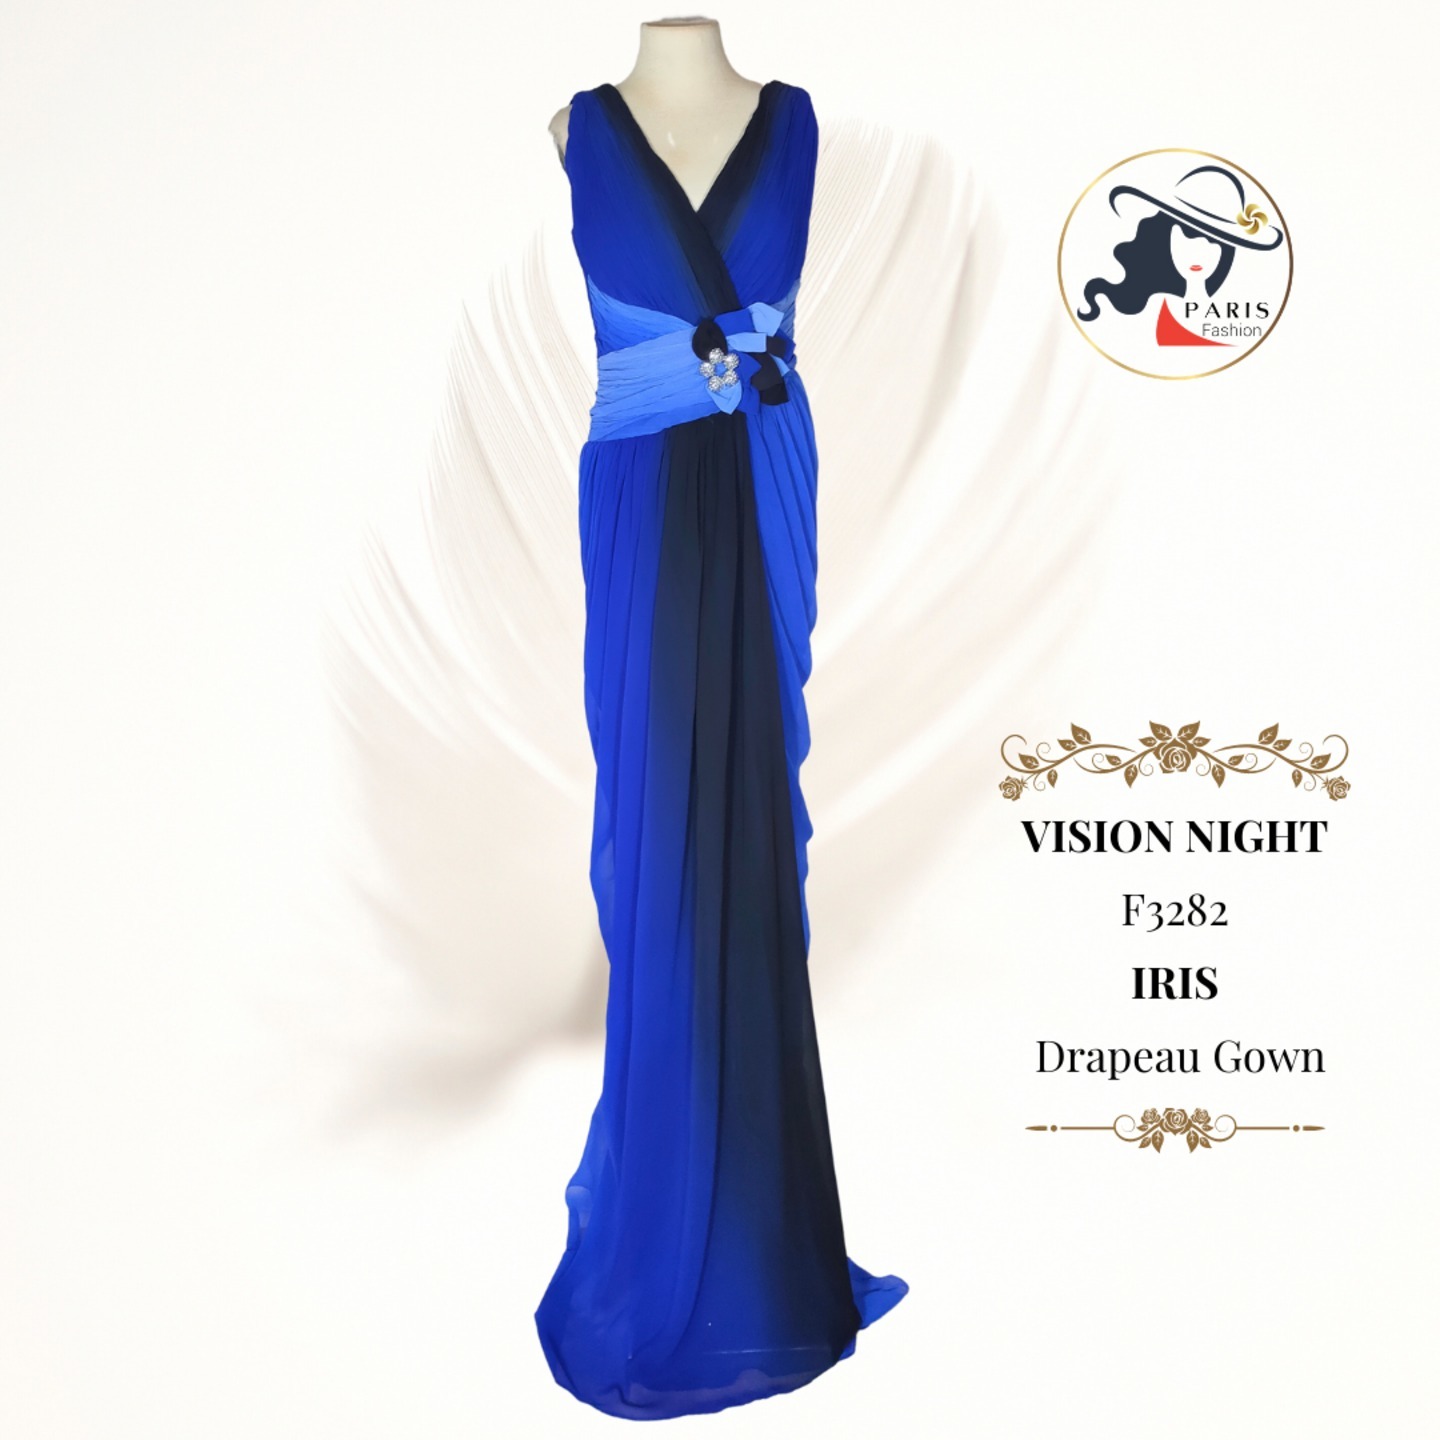 VISION NIGHT  F3282  IRIS   Drapeau Gown